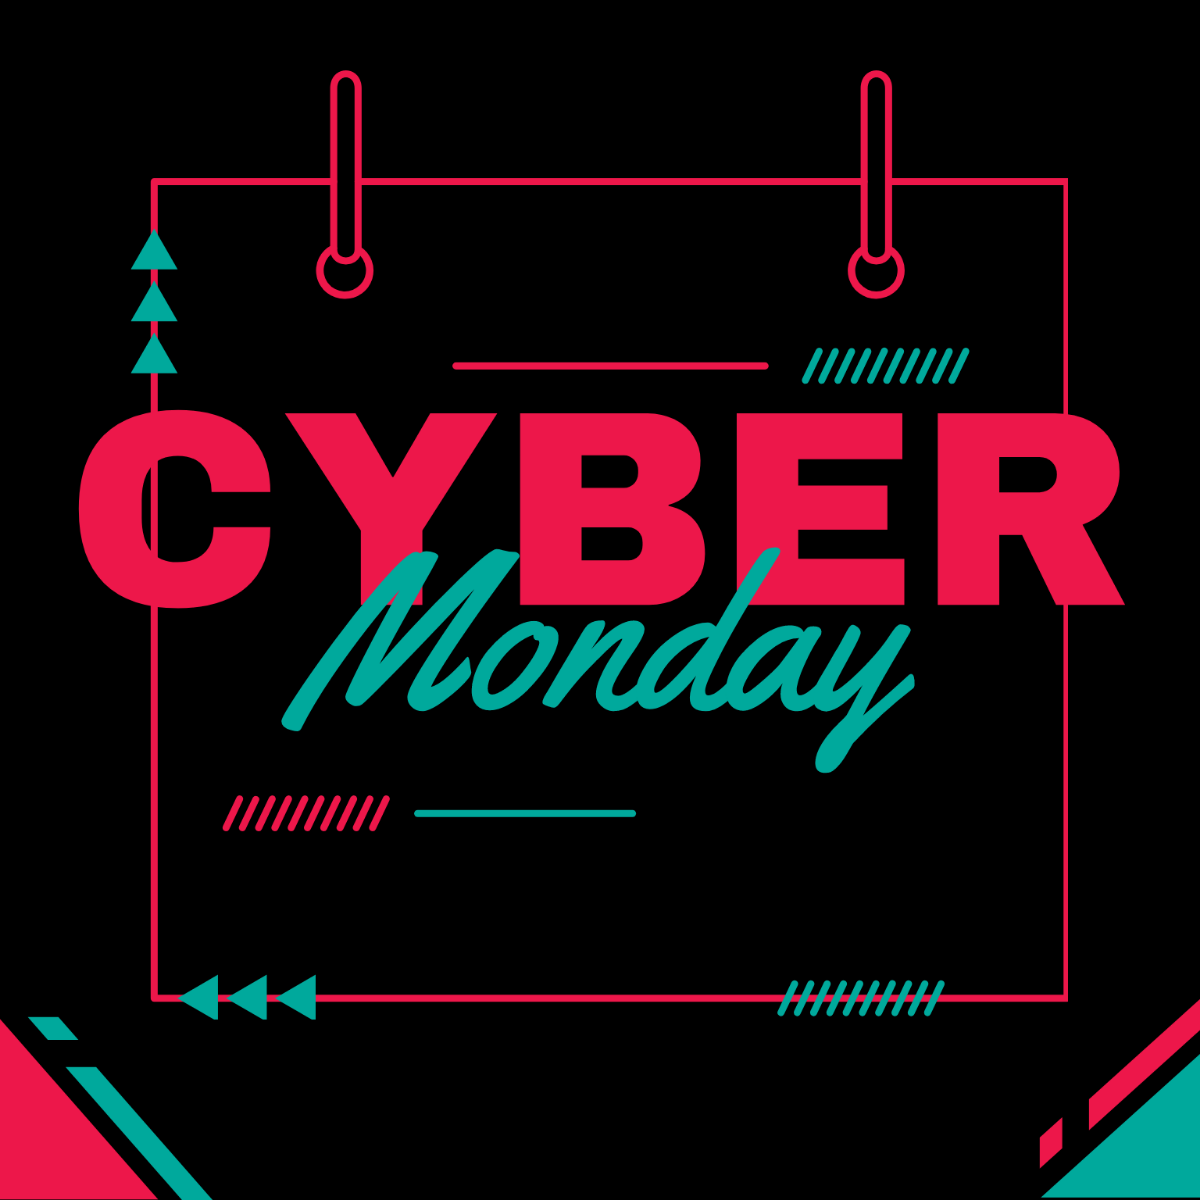 Free Cyber Monday Calendar Vector Template